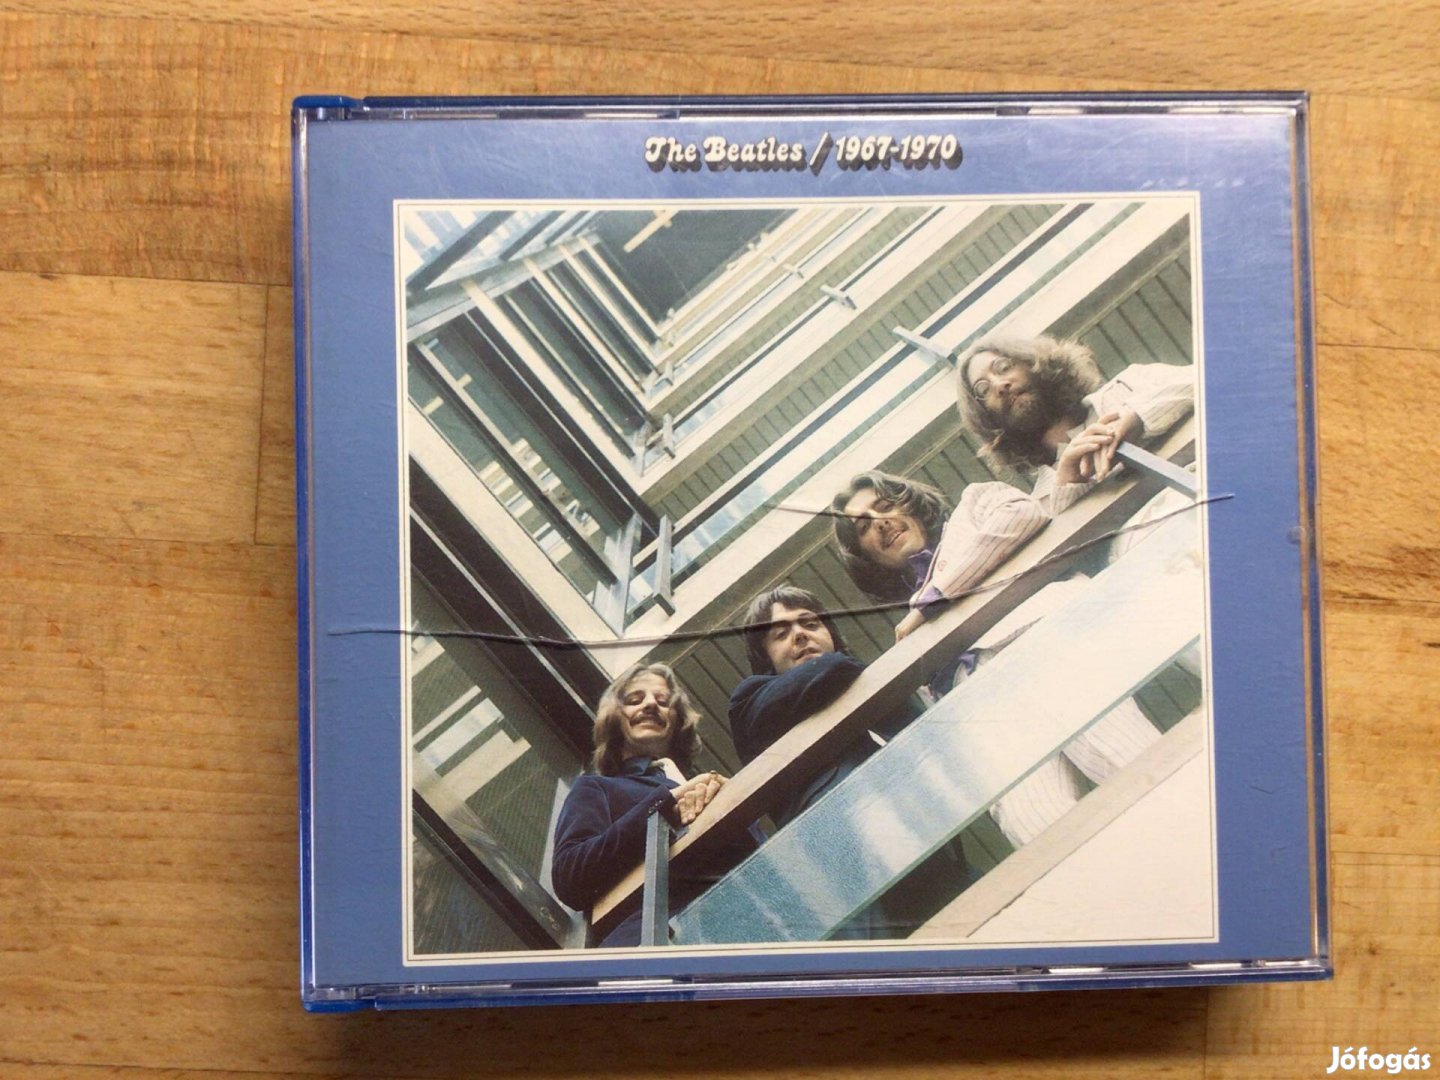 The Beatles - 1967-1970, dupla cd album